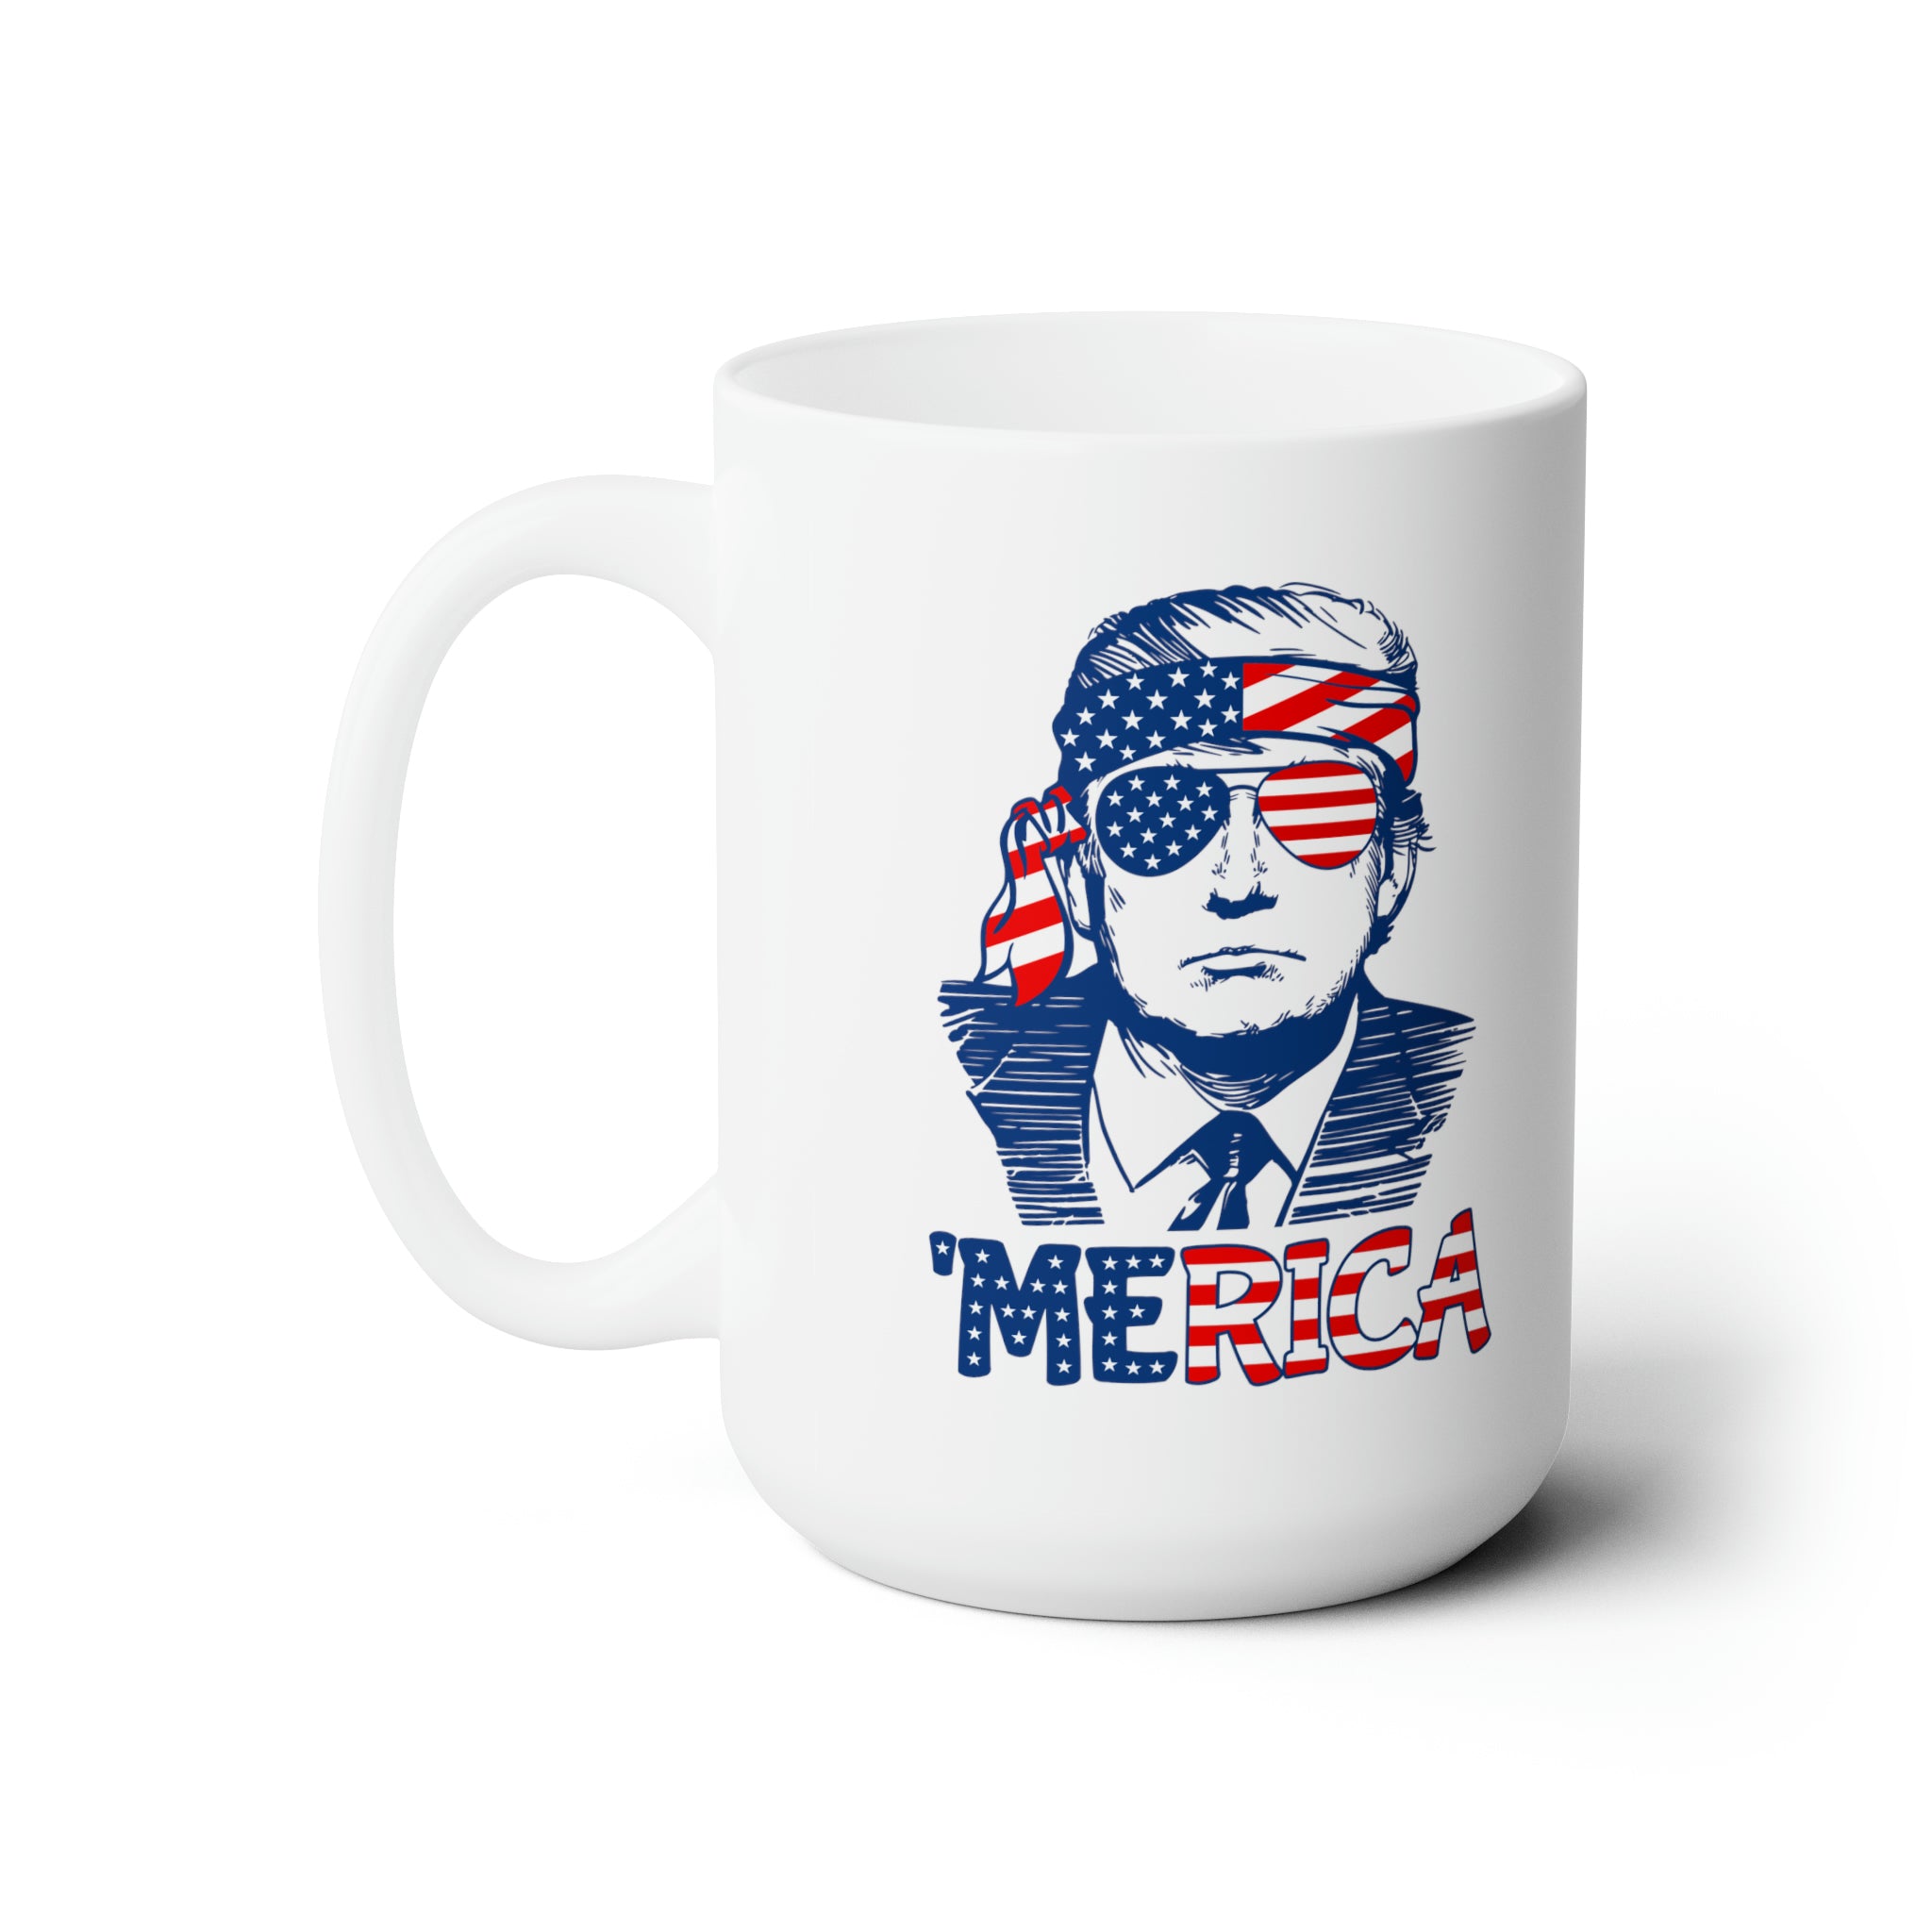 Merica Trump White Ceramic Mug